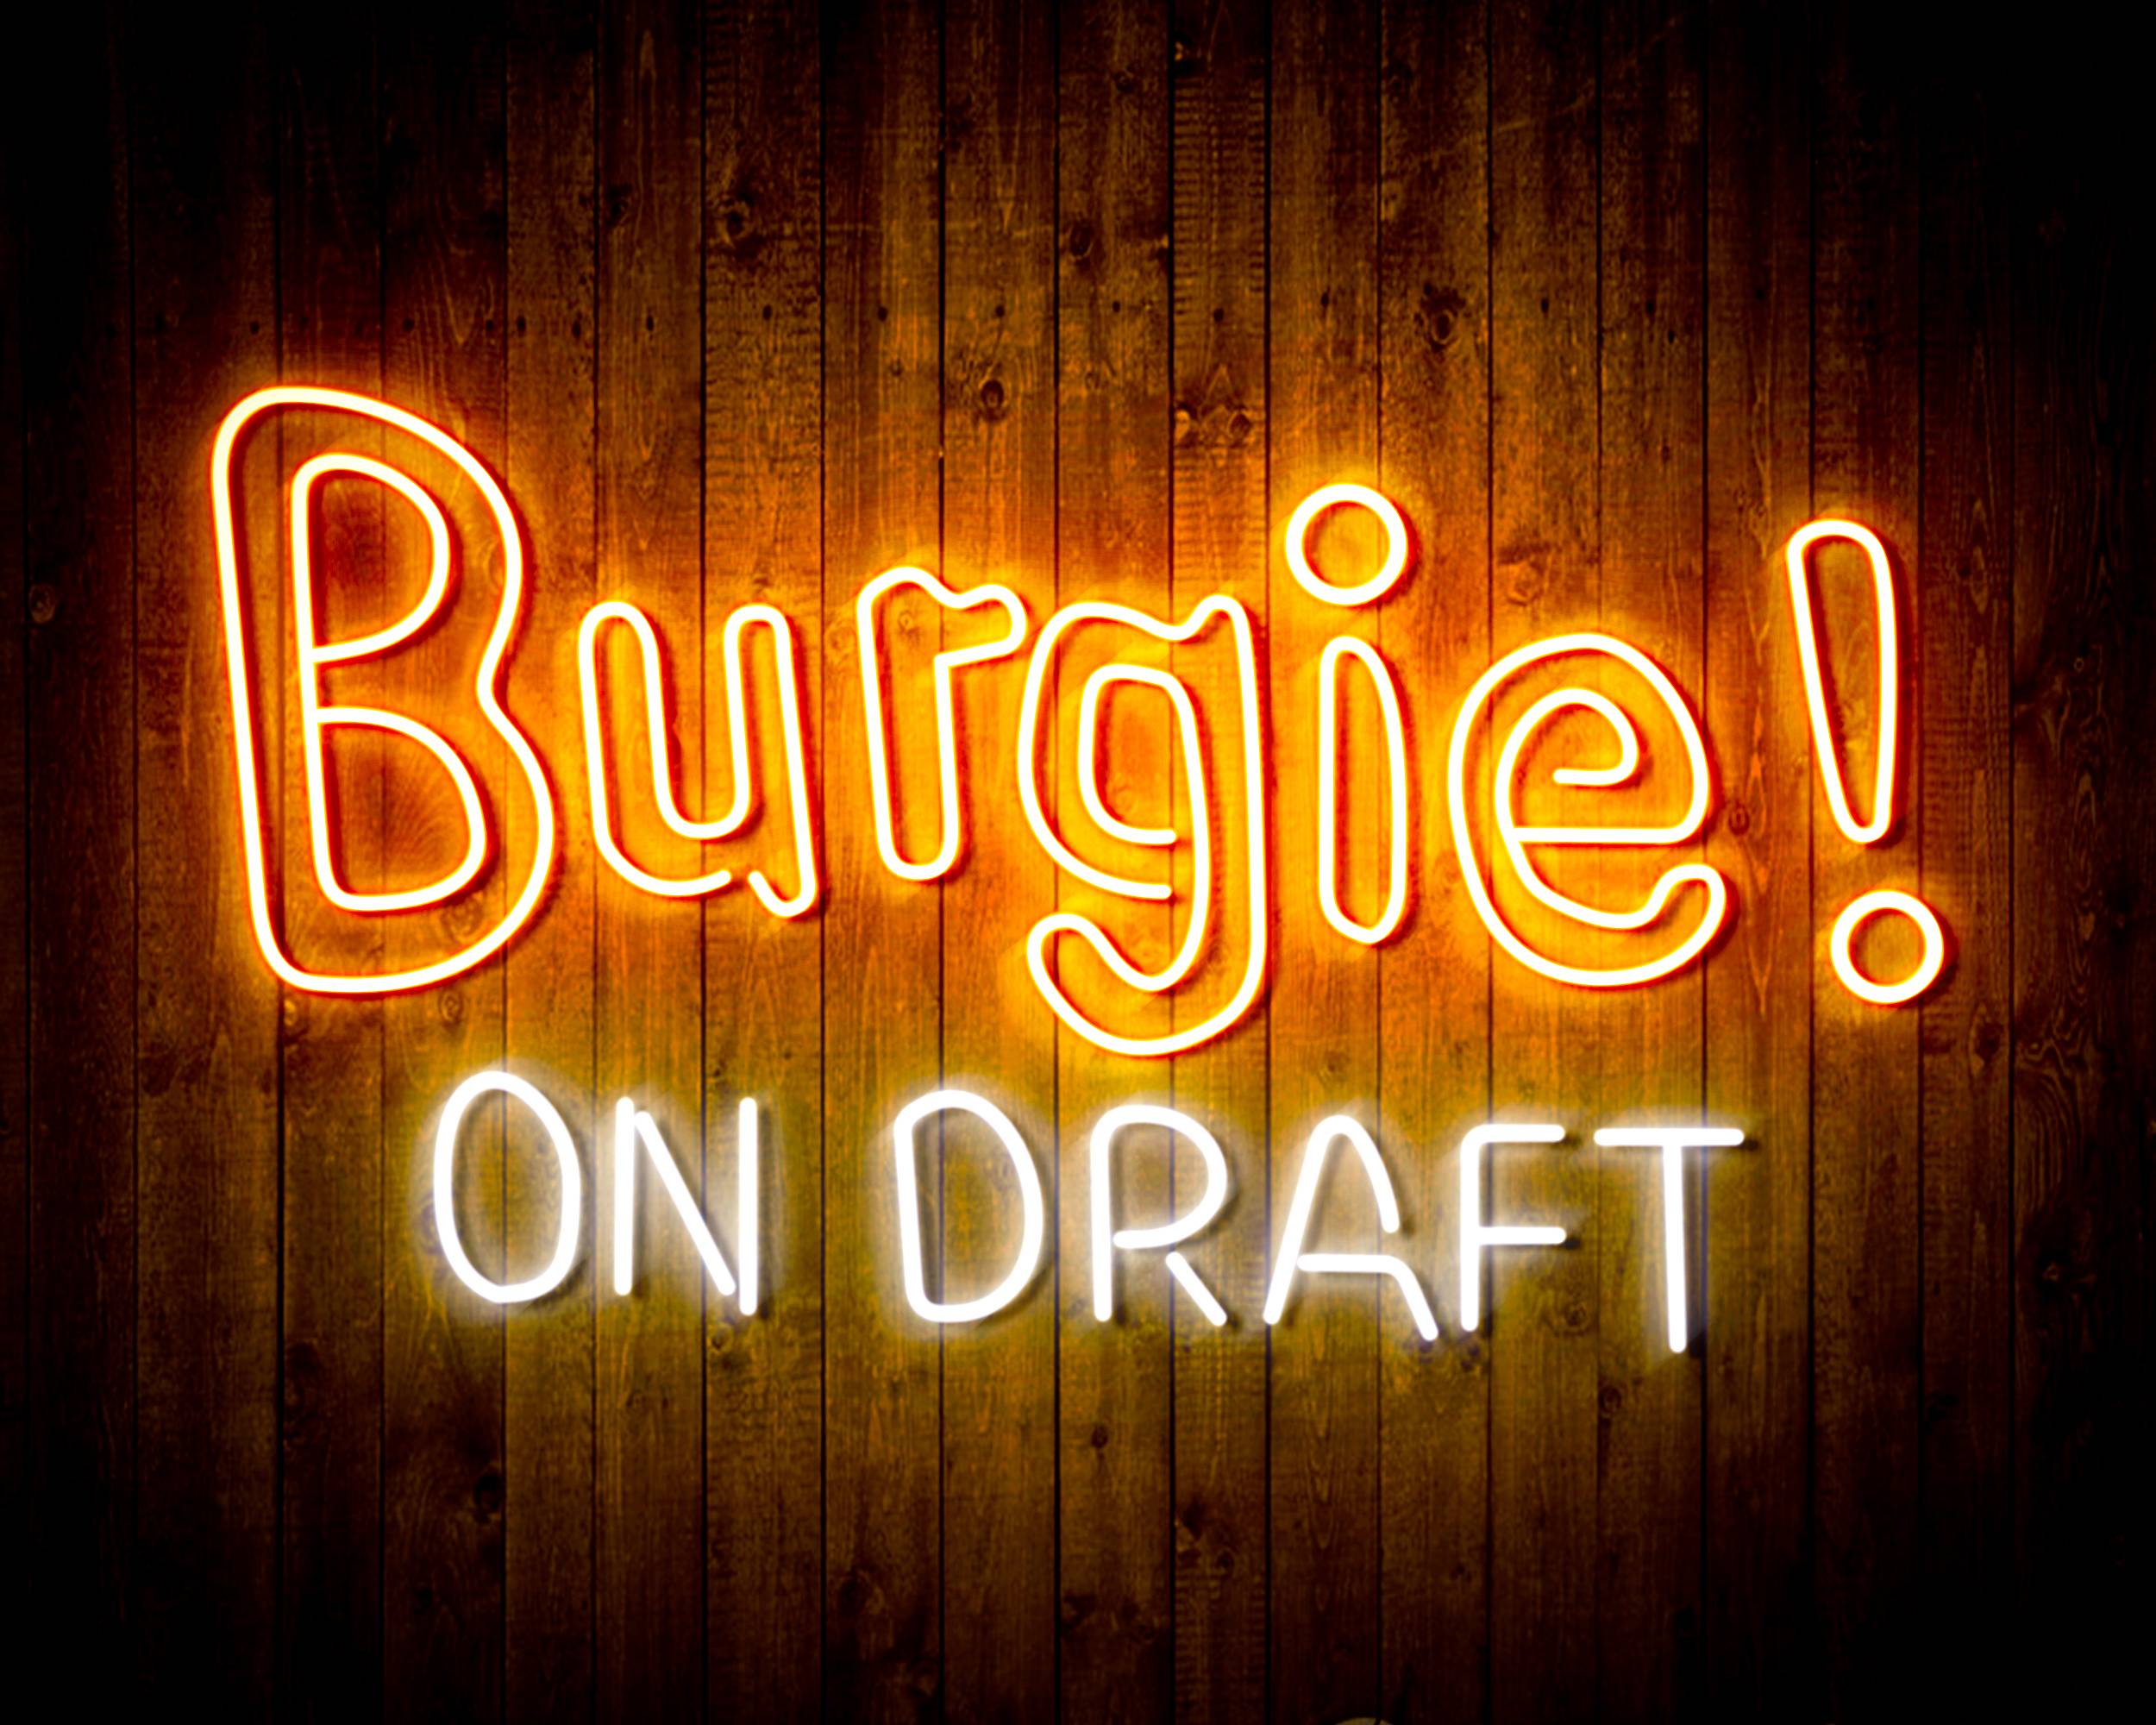 Burgie! On Draft Handmade LED Neon Light Sign